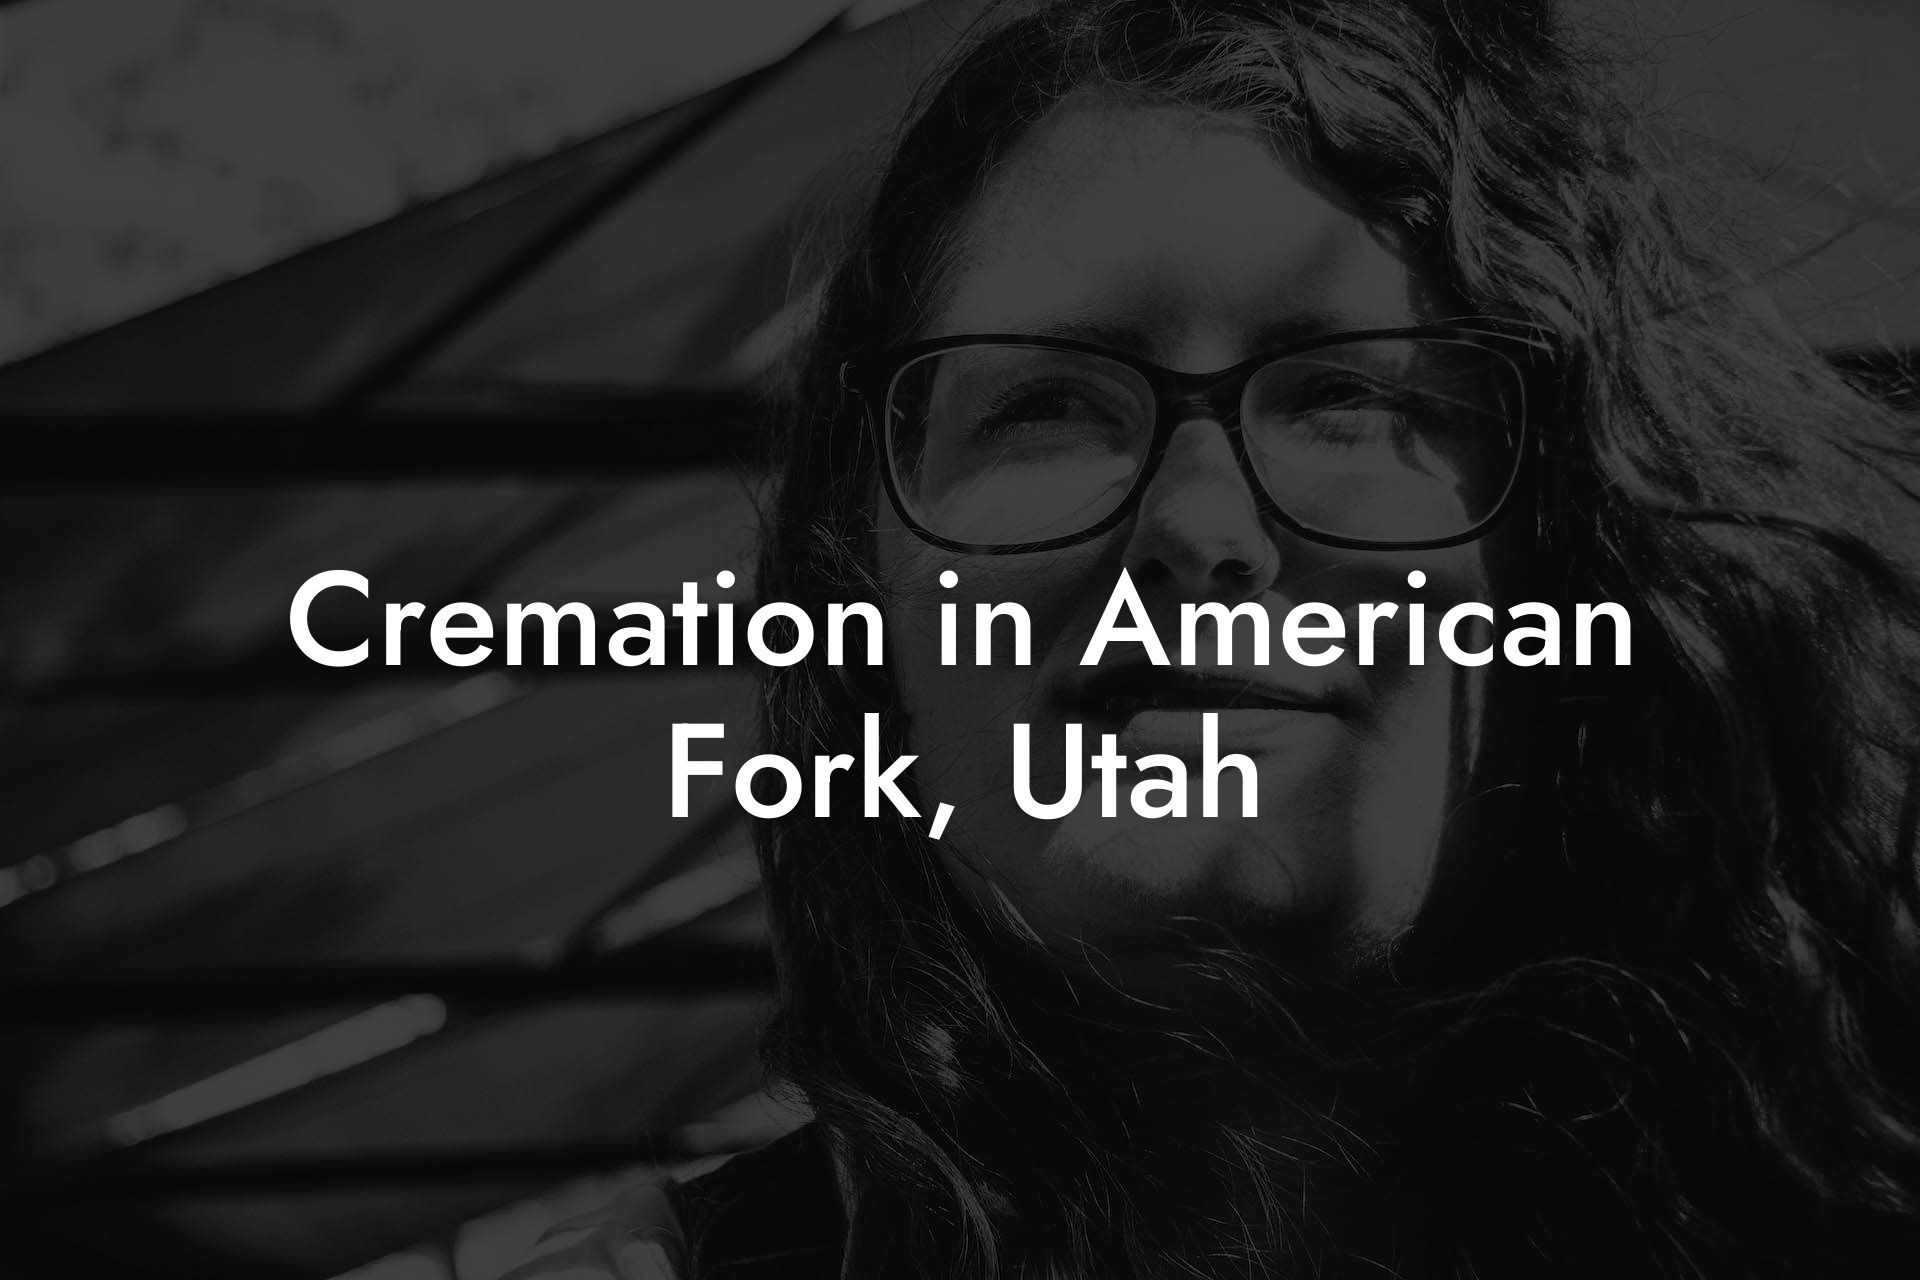 Cremation in American Fork, Utah